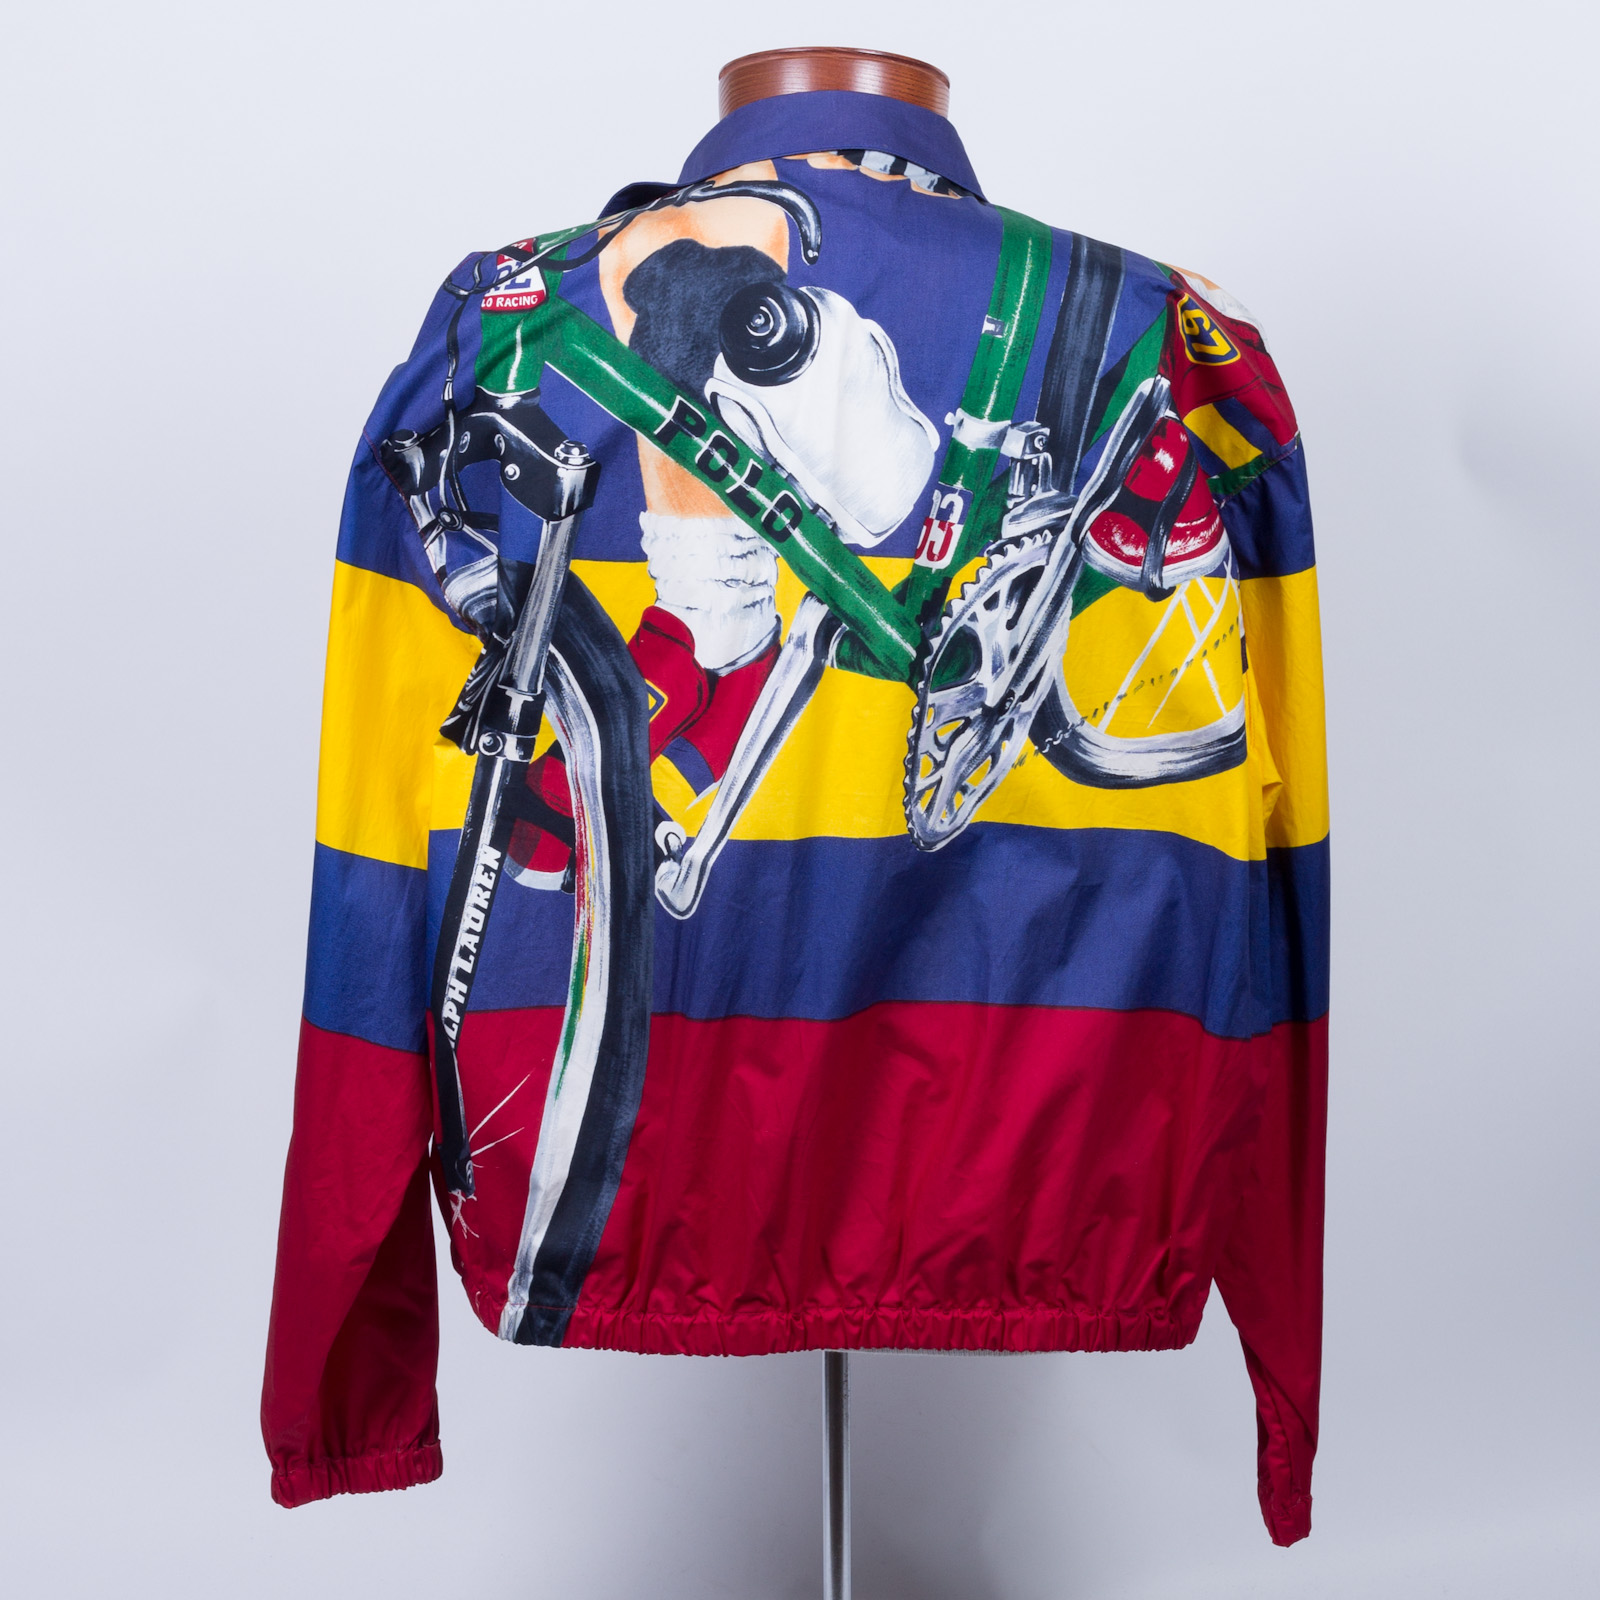 File:Vintage cycle print racing jacket by Polo Ralph Lauren 3.jpg -  Wikipedia